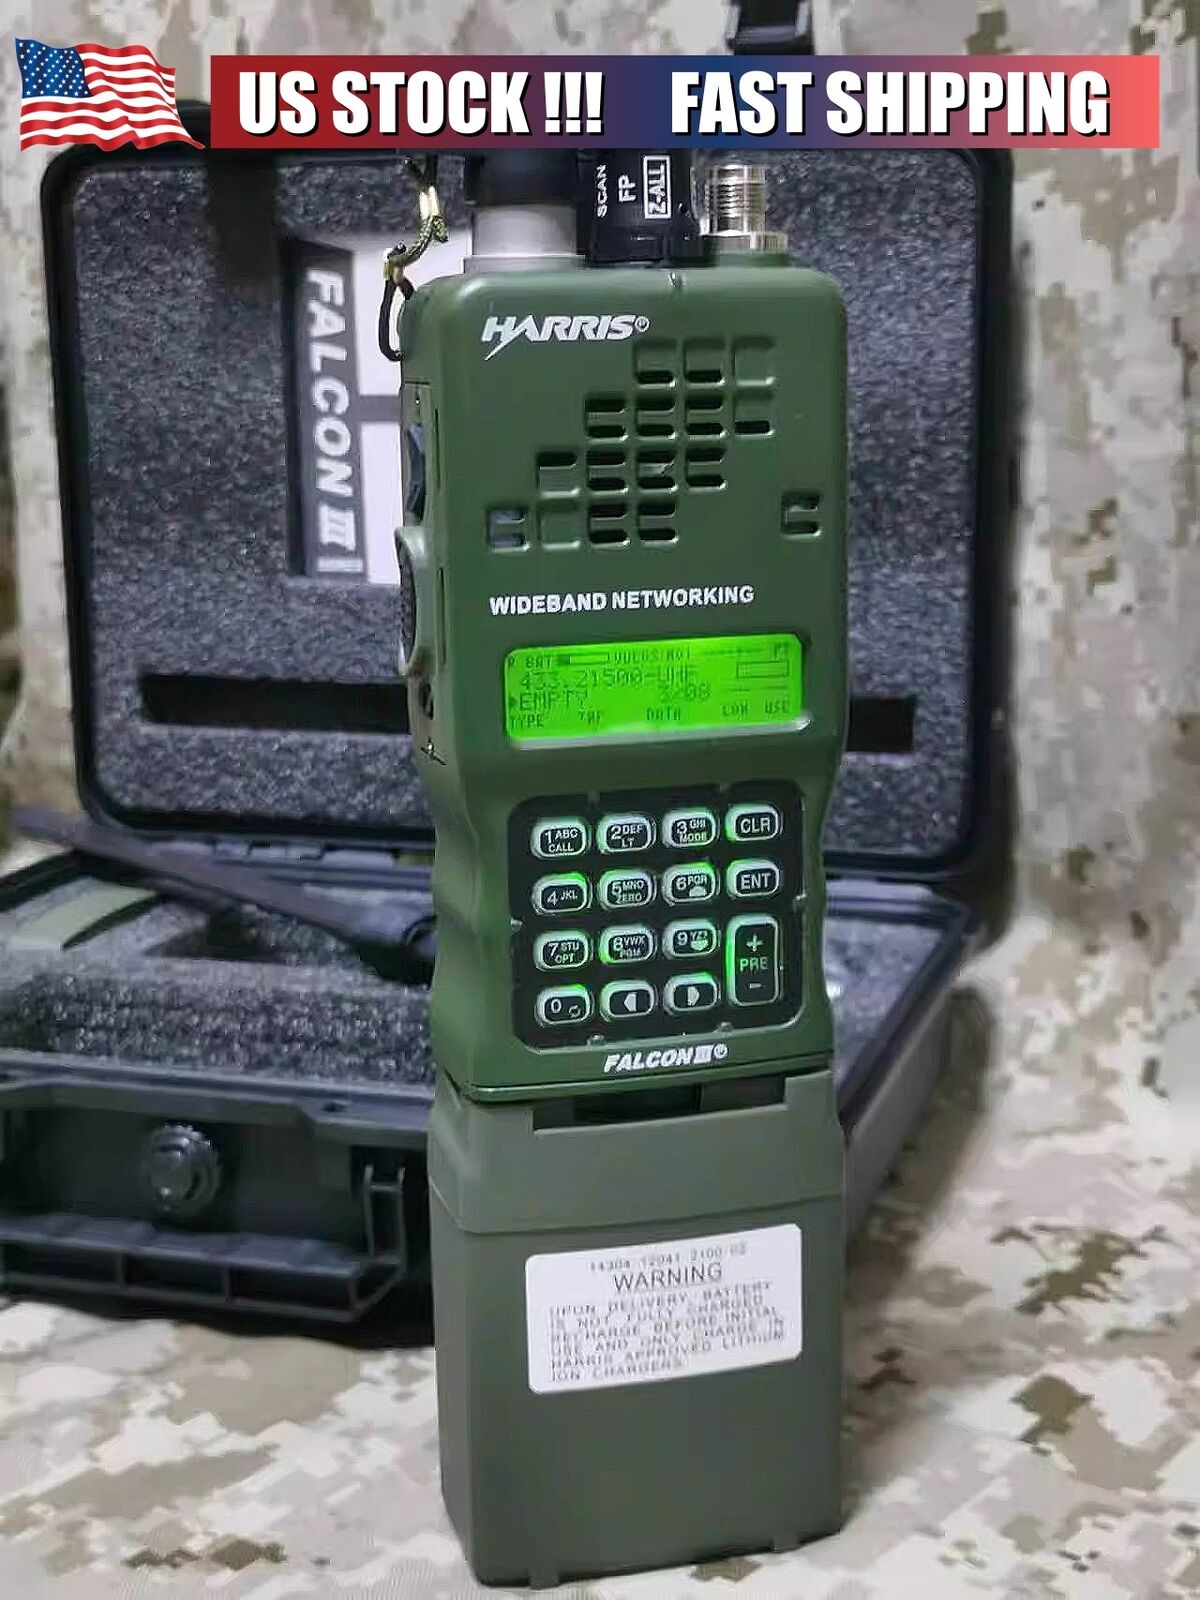 USTCA/PRC-152A Tactical Handheld Radio GPS Ver. UHF/VHF Dual Band Walkie Talkie